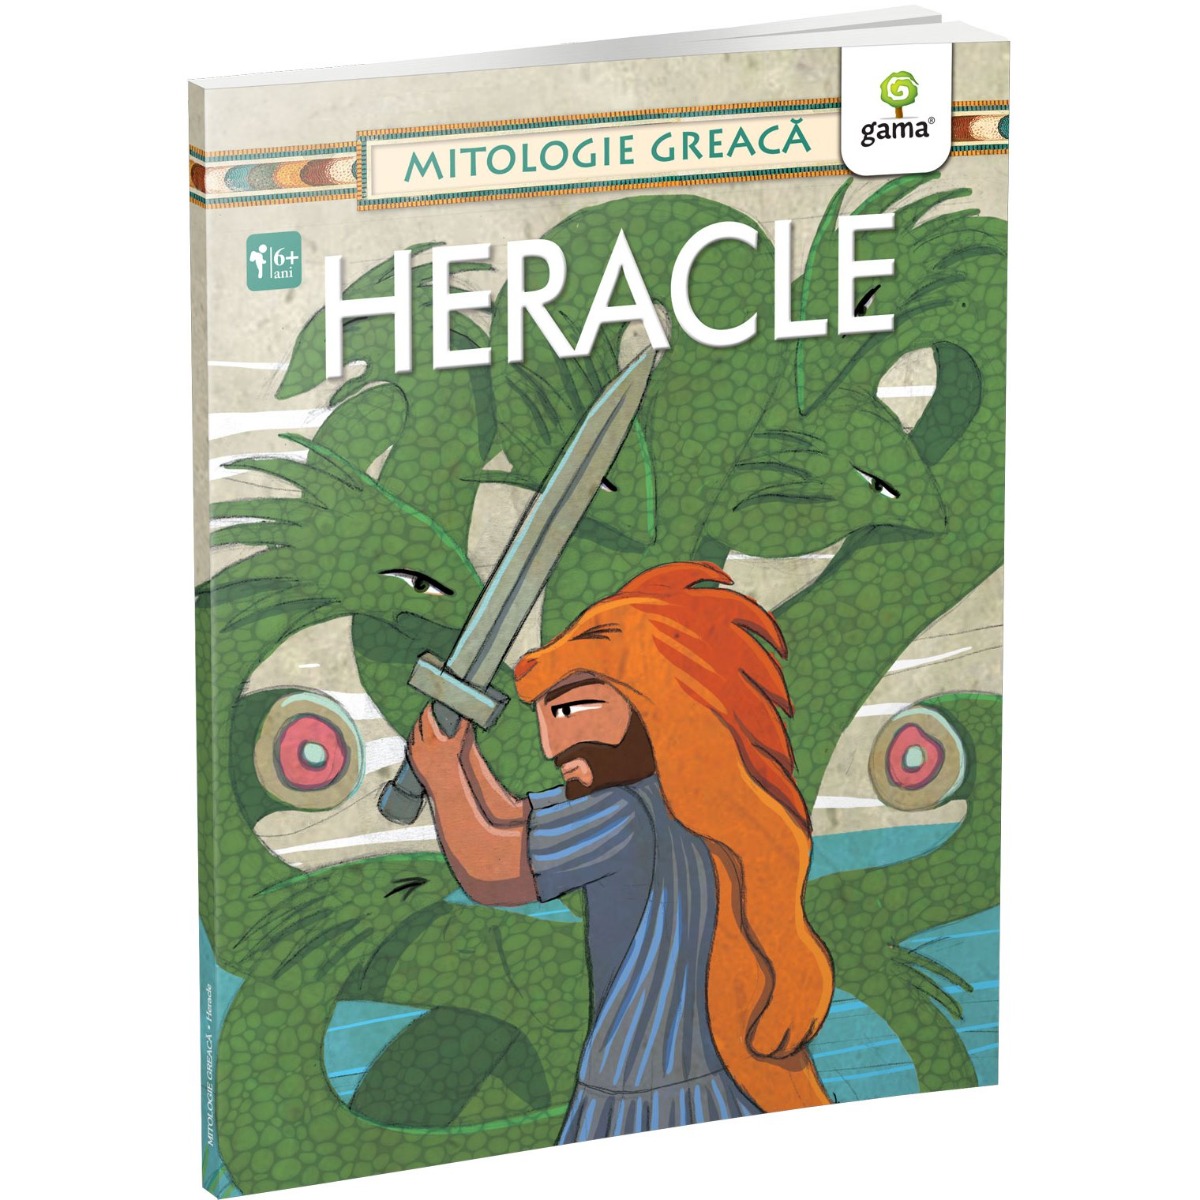 Heracle, Mitologie greaca